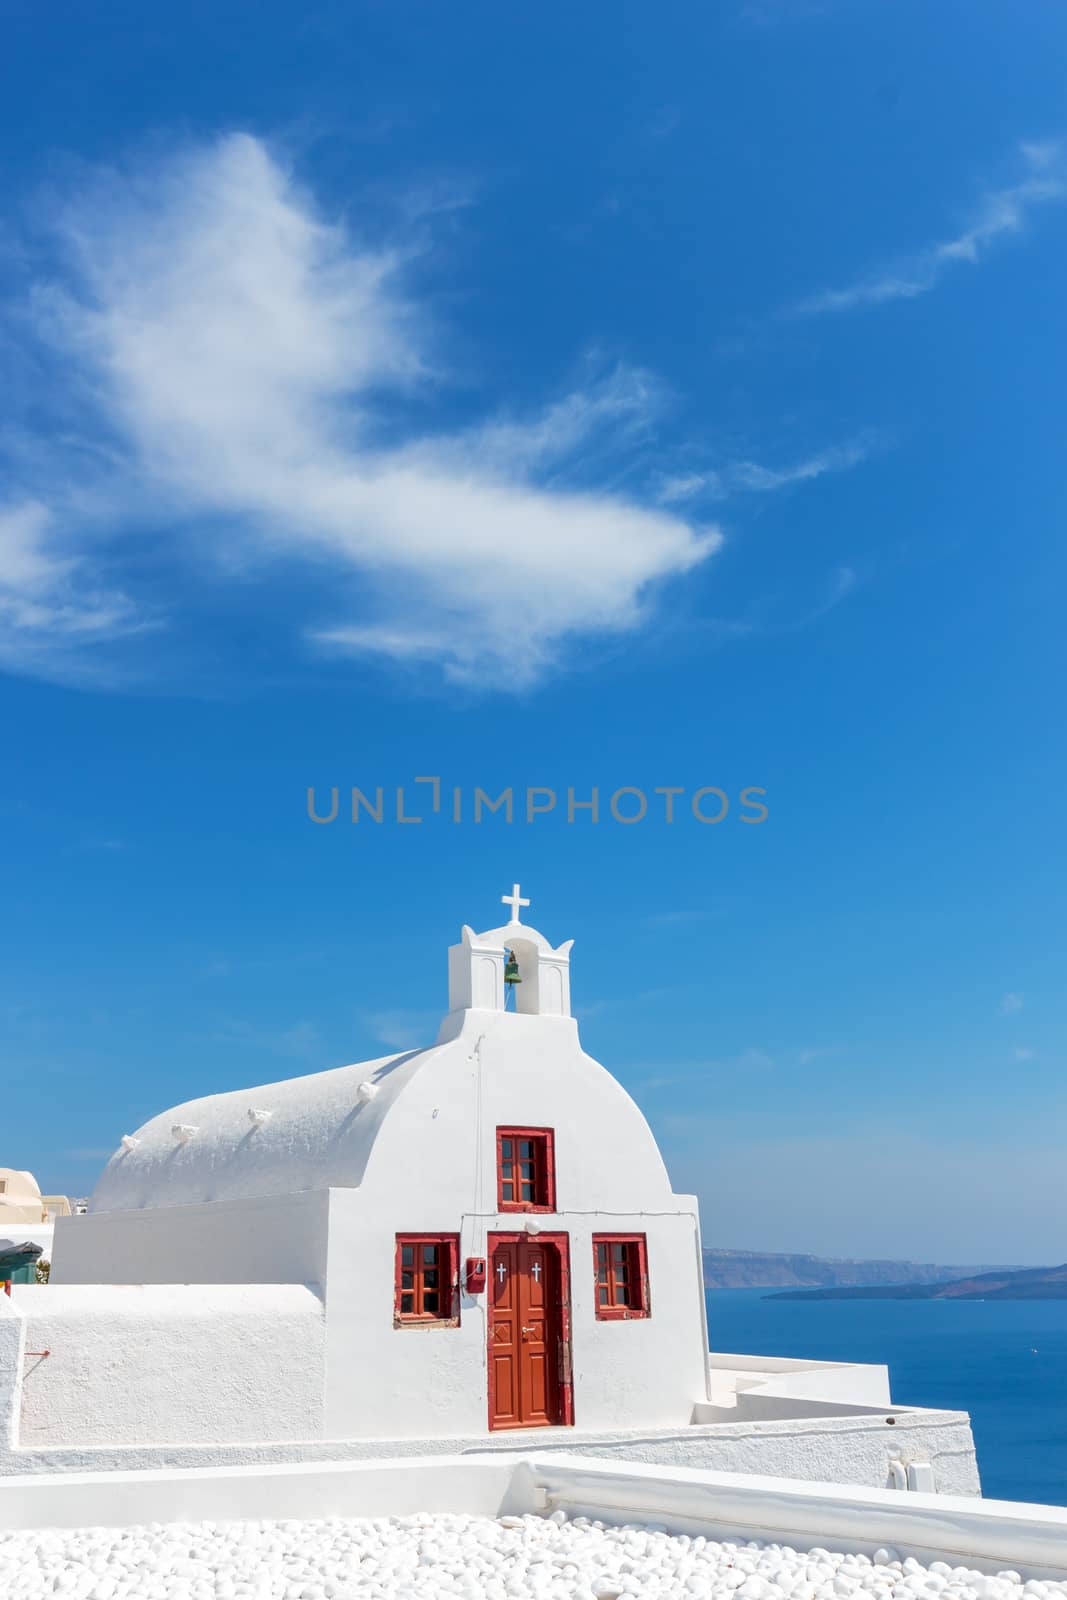 Traditional blue dome church in Santorini Greece